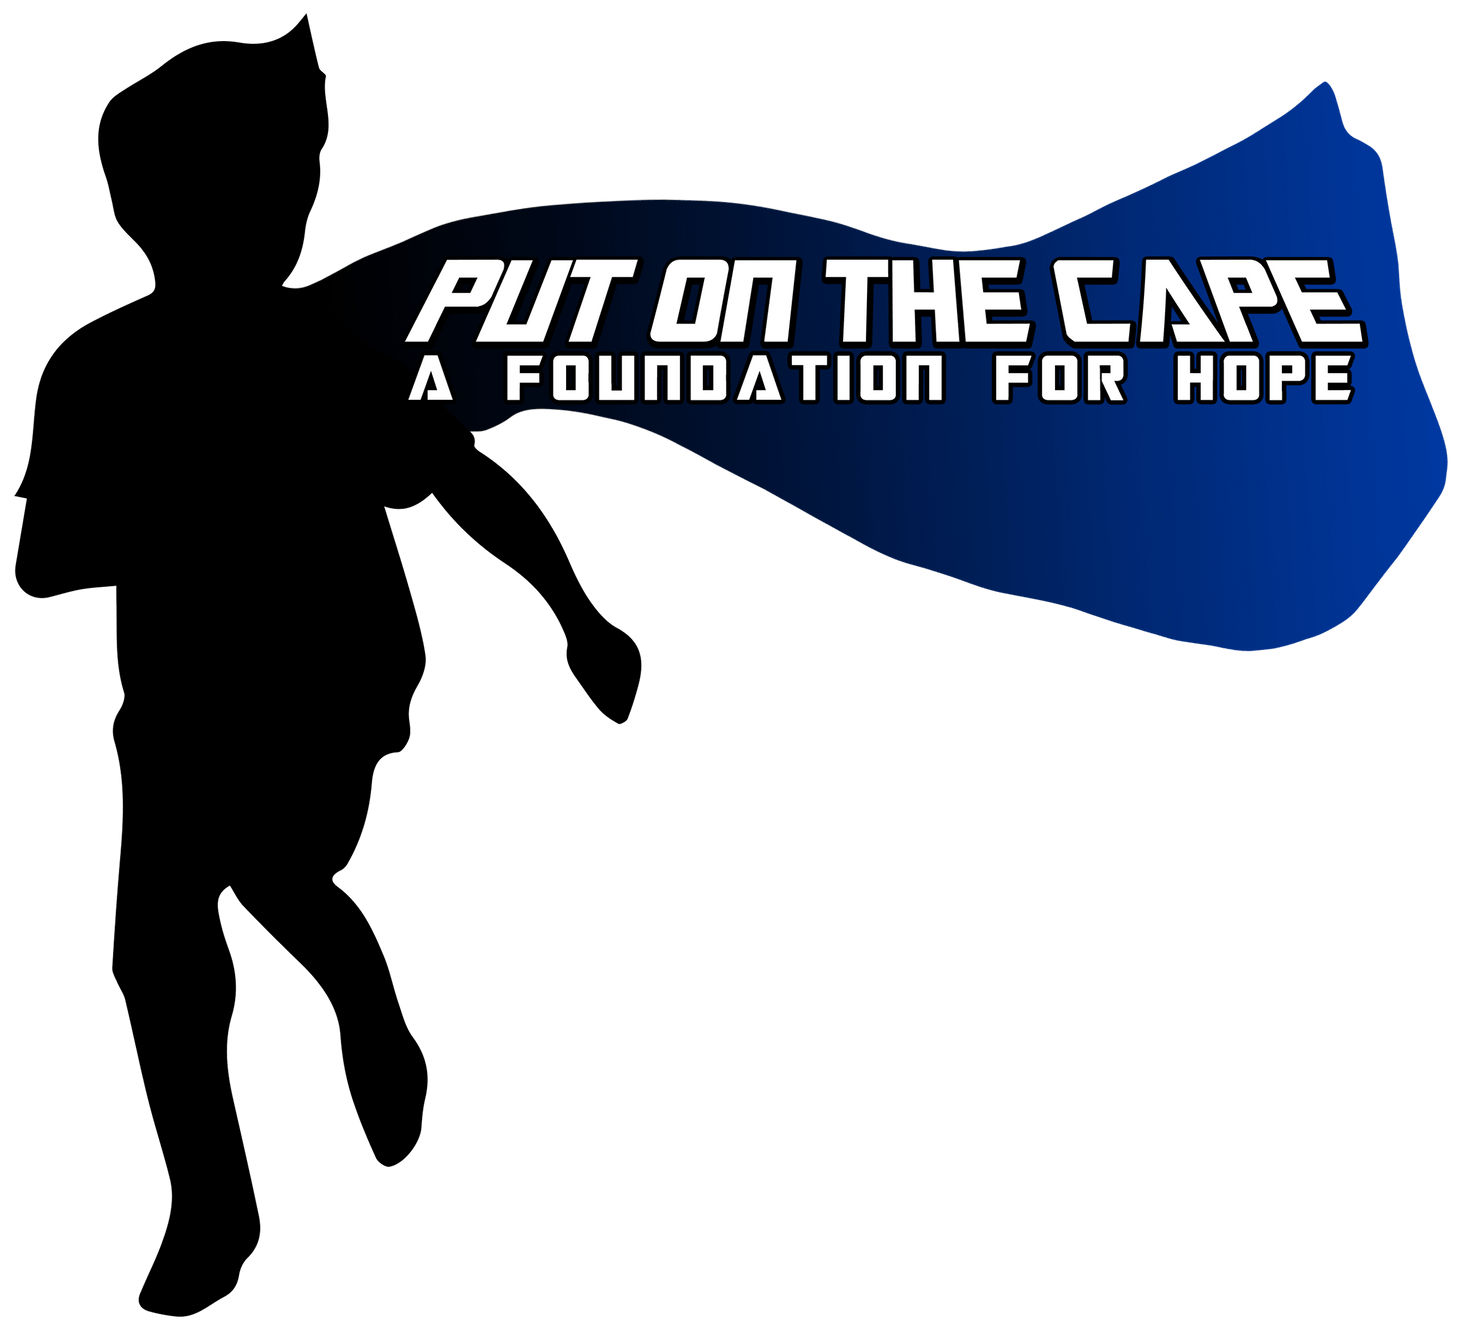 Put On The Cape: A Foundation For Hope | Phoenix, AZ